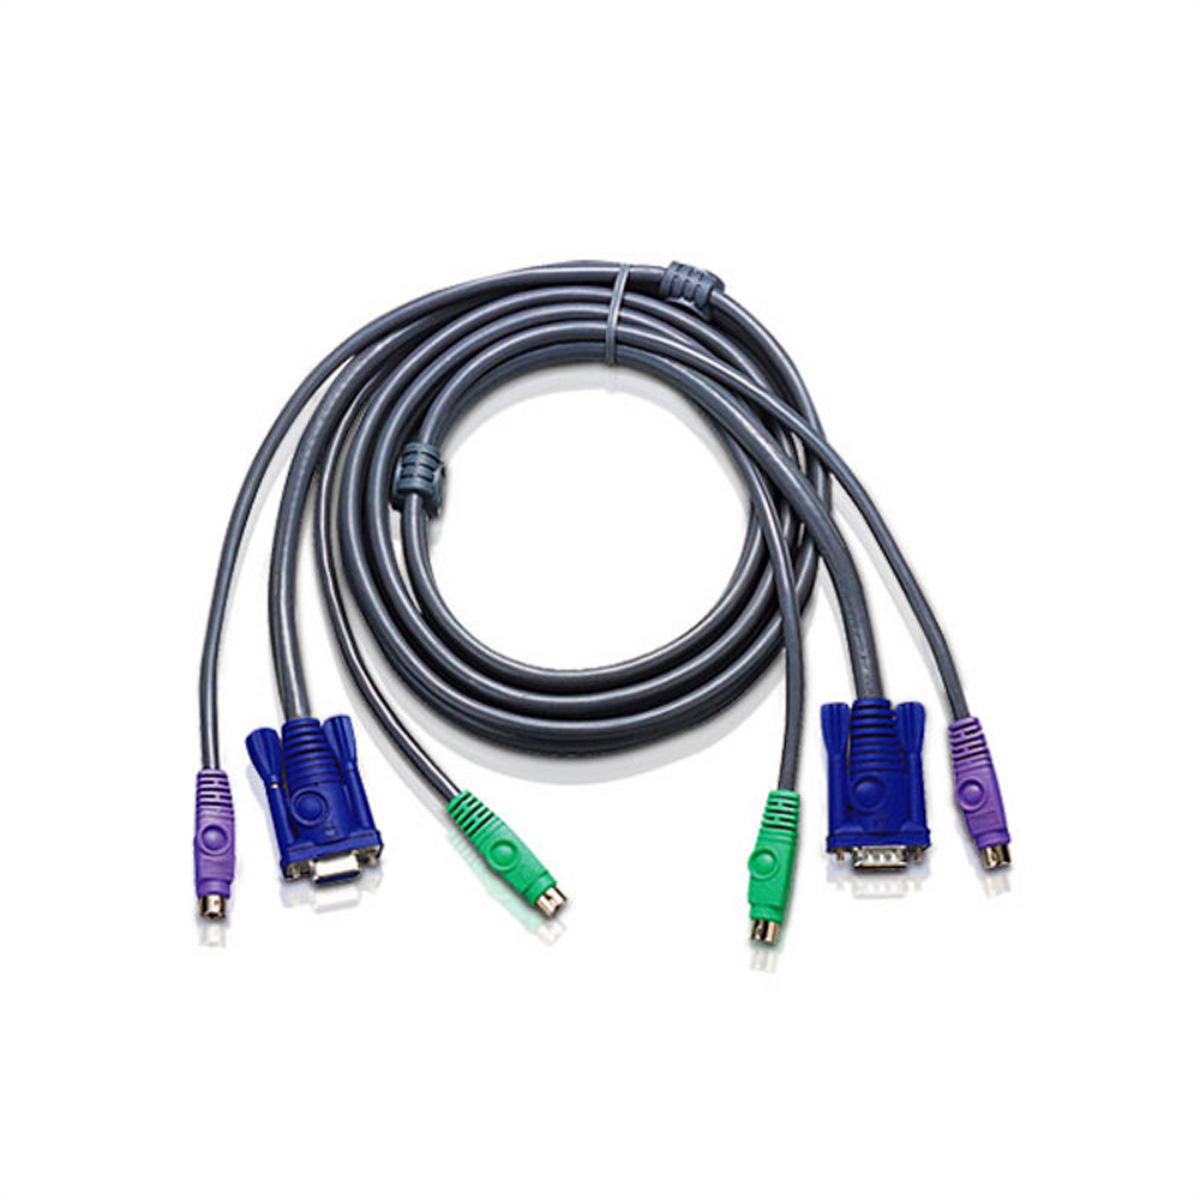 ATEN 2L-5002P/C KVM PS/2 VGA Kabel, grau, 1,8 m